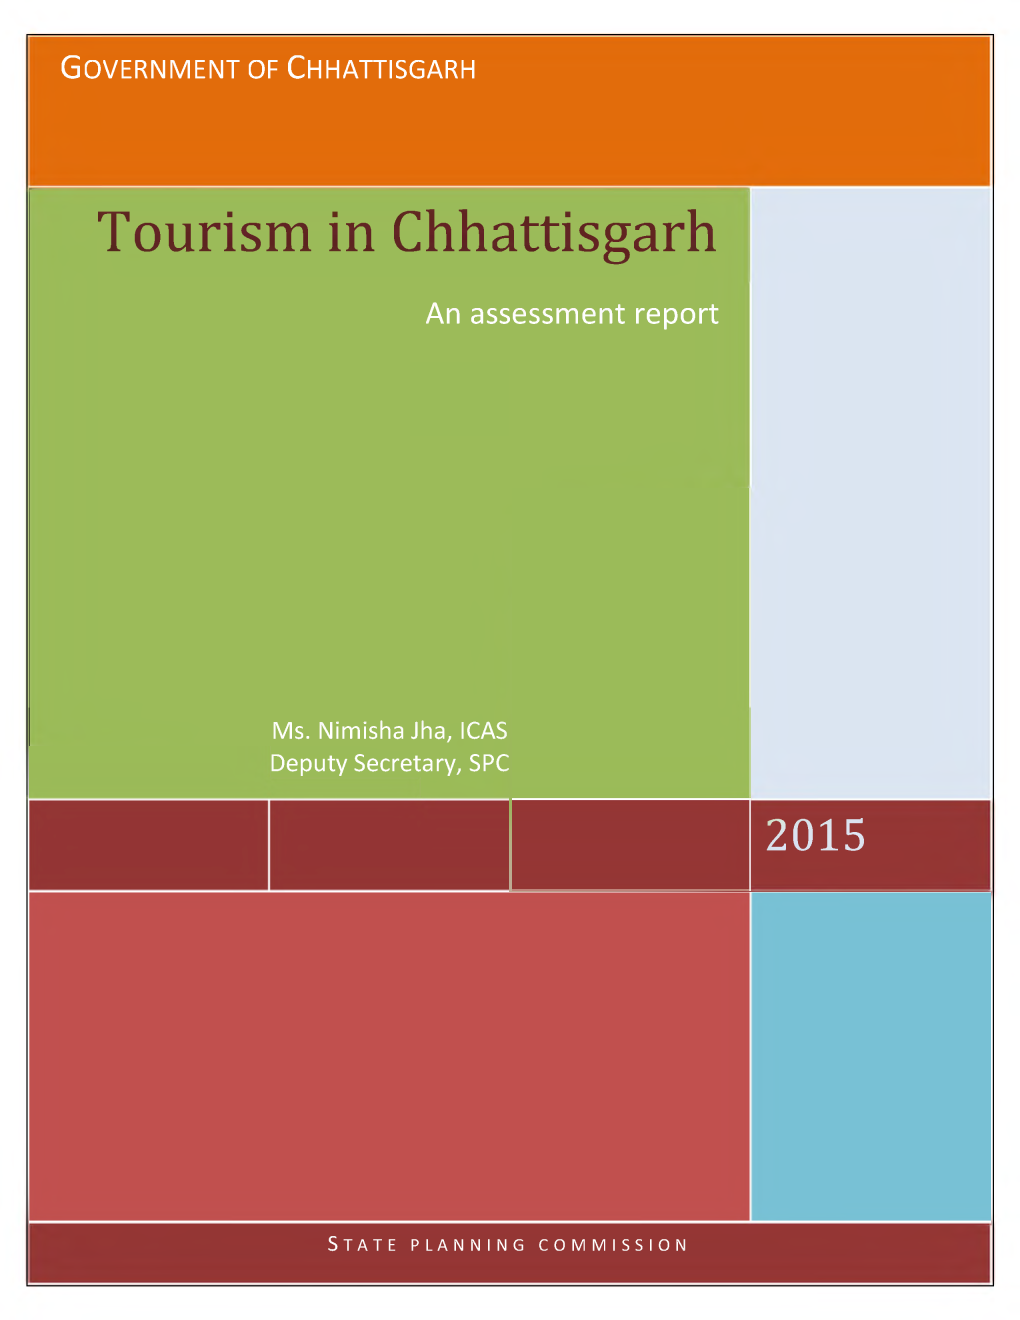 Tourism in Chhattisgarh